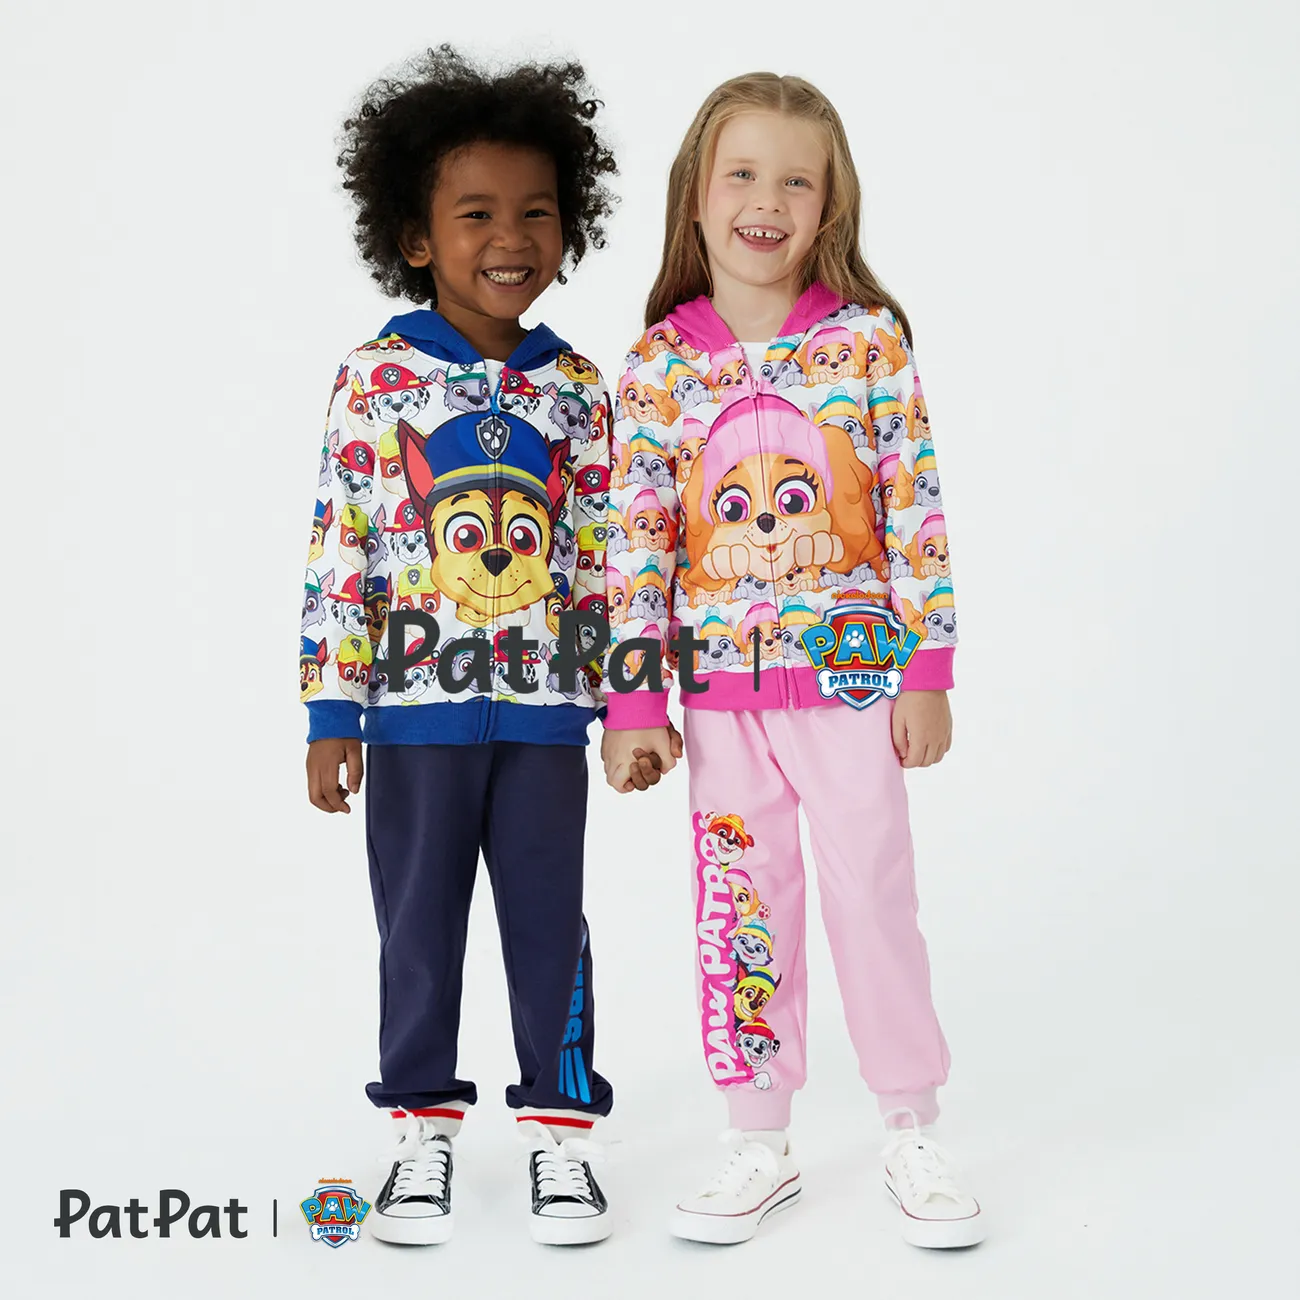 PAW Patrol Toddler Girl/Boy Character Print Zipper Design Hooded Jacket Blue big image 1